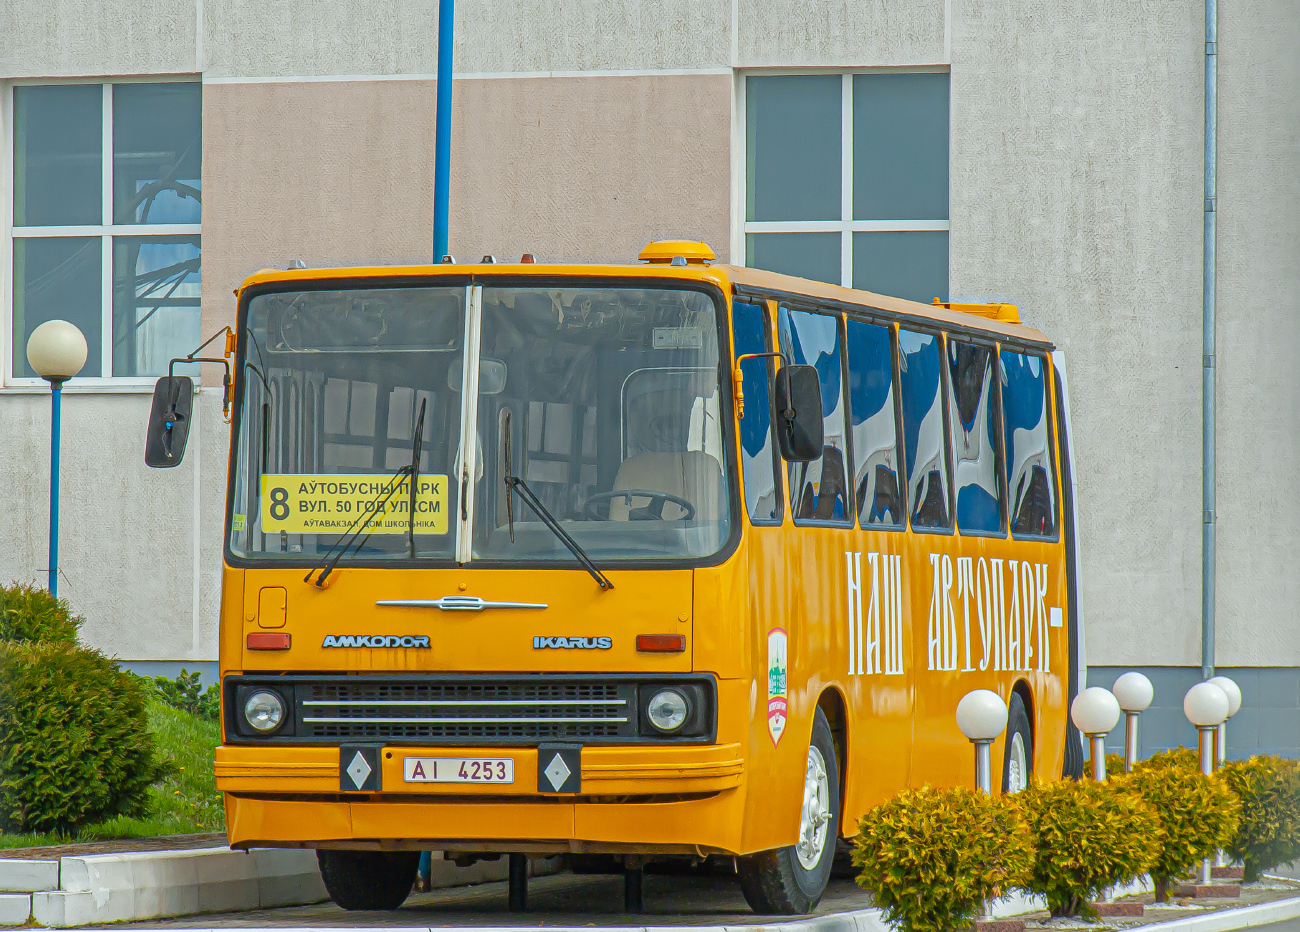 Baranovichi, Amkodor-10126 (Ikarus 280) №: 11490; Автобусы-памятники